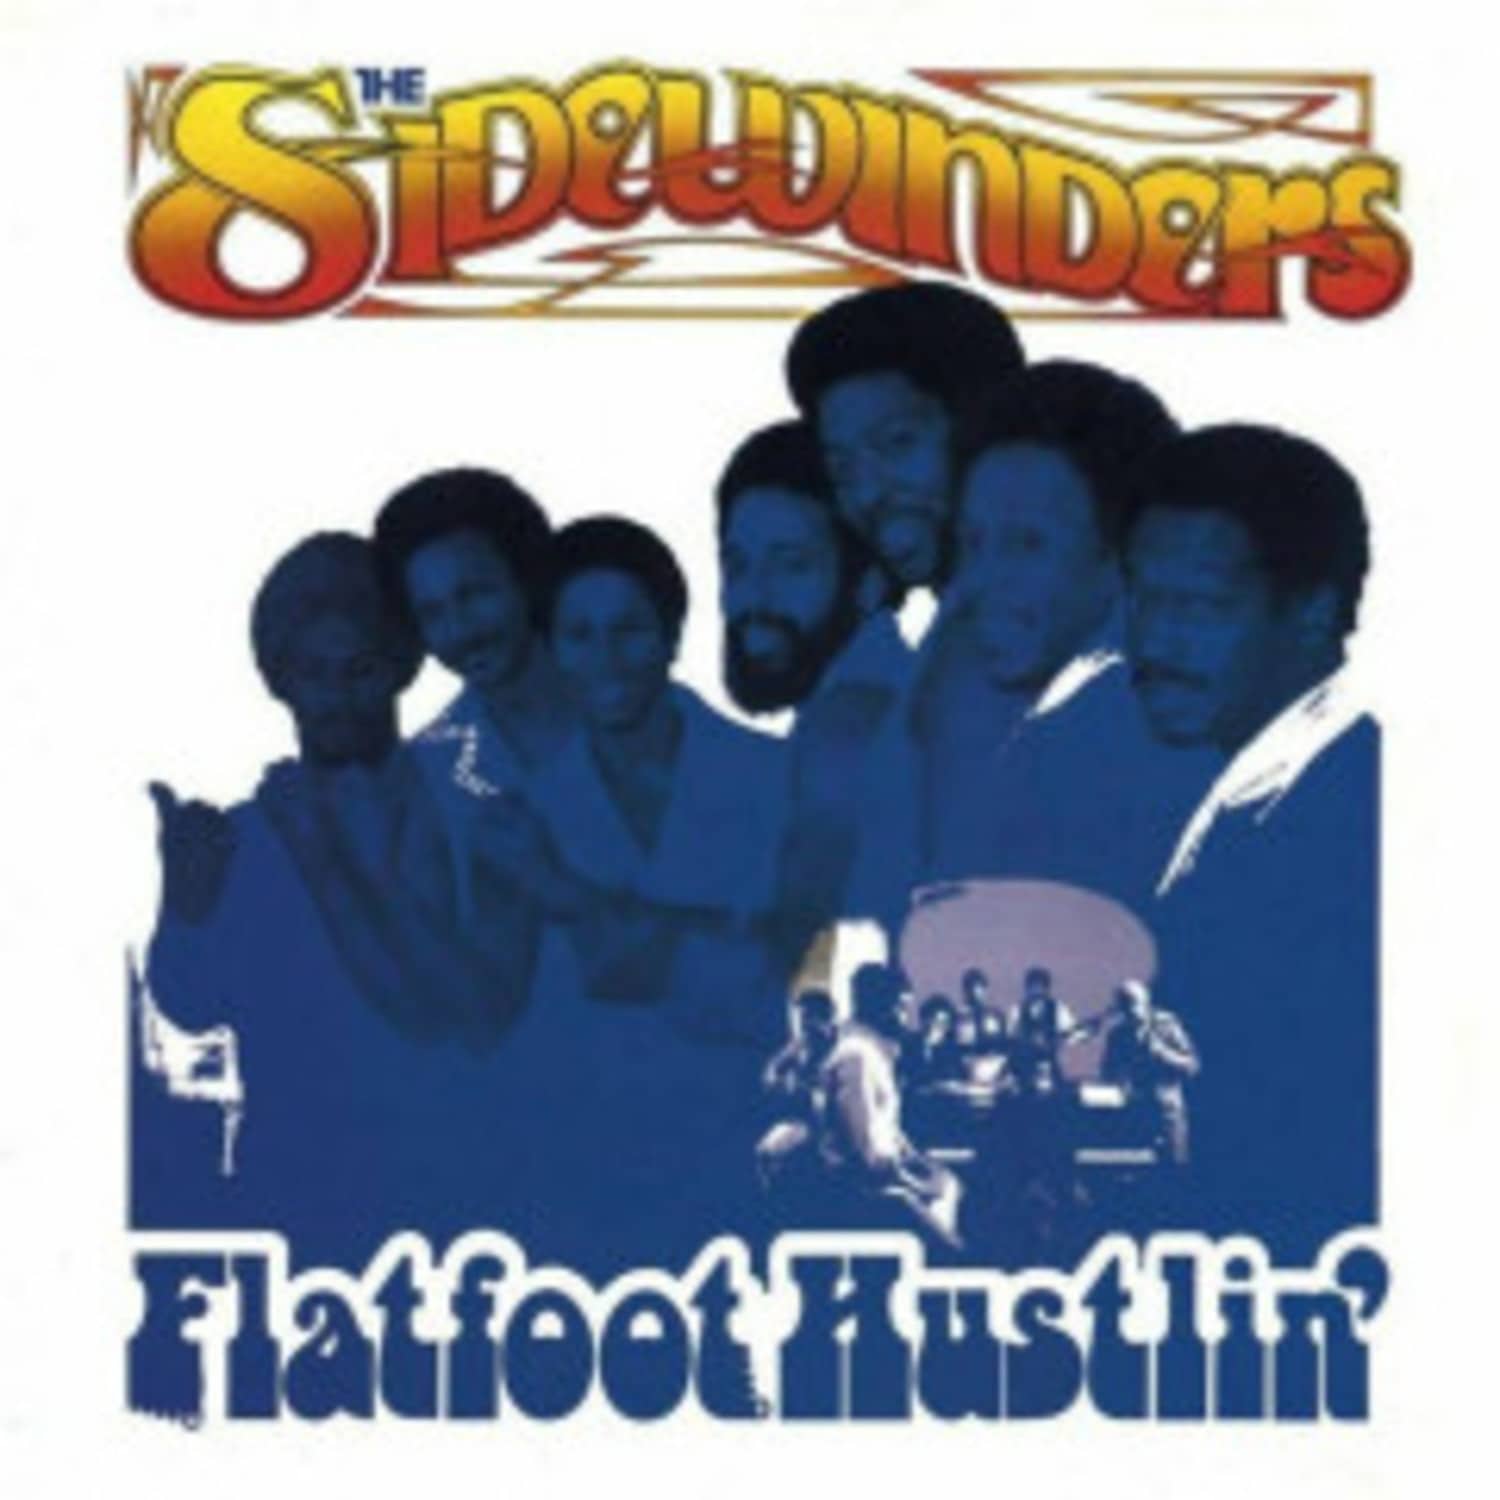 The Sidewinders - FLATFOOT HUSTLIN 